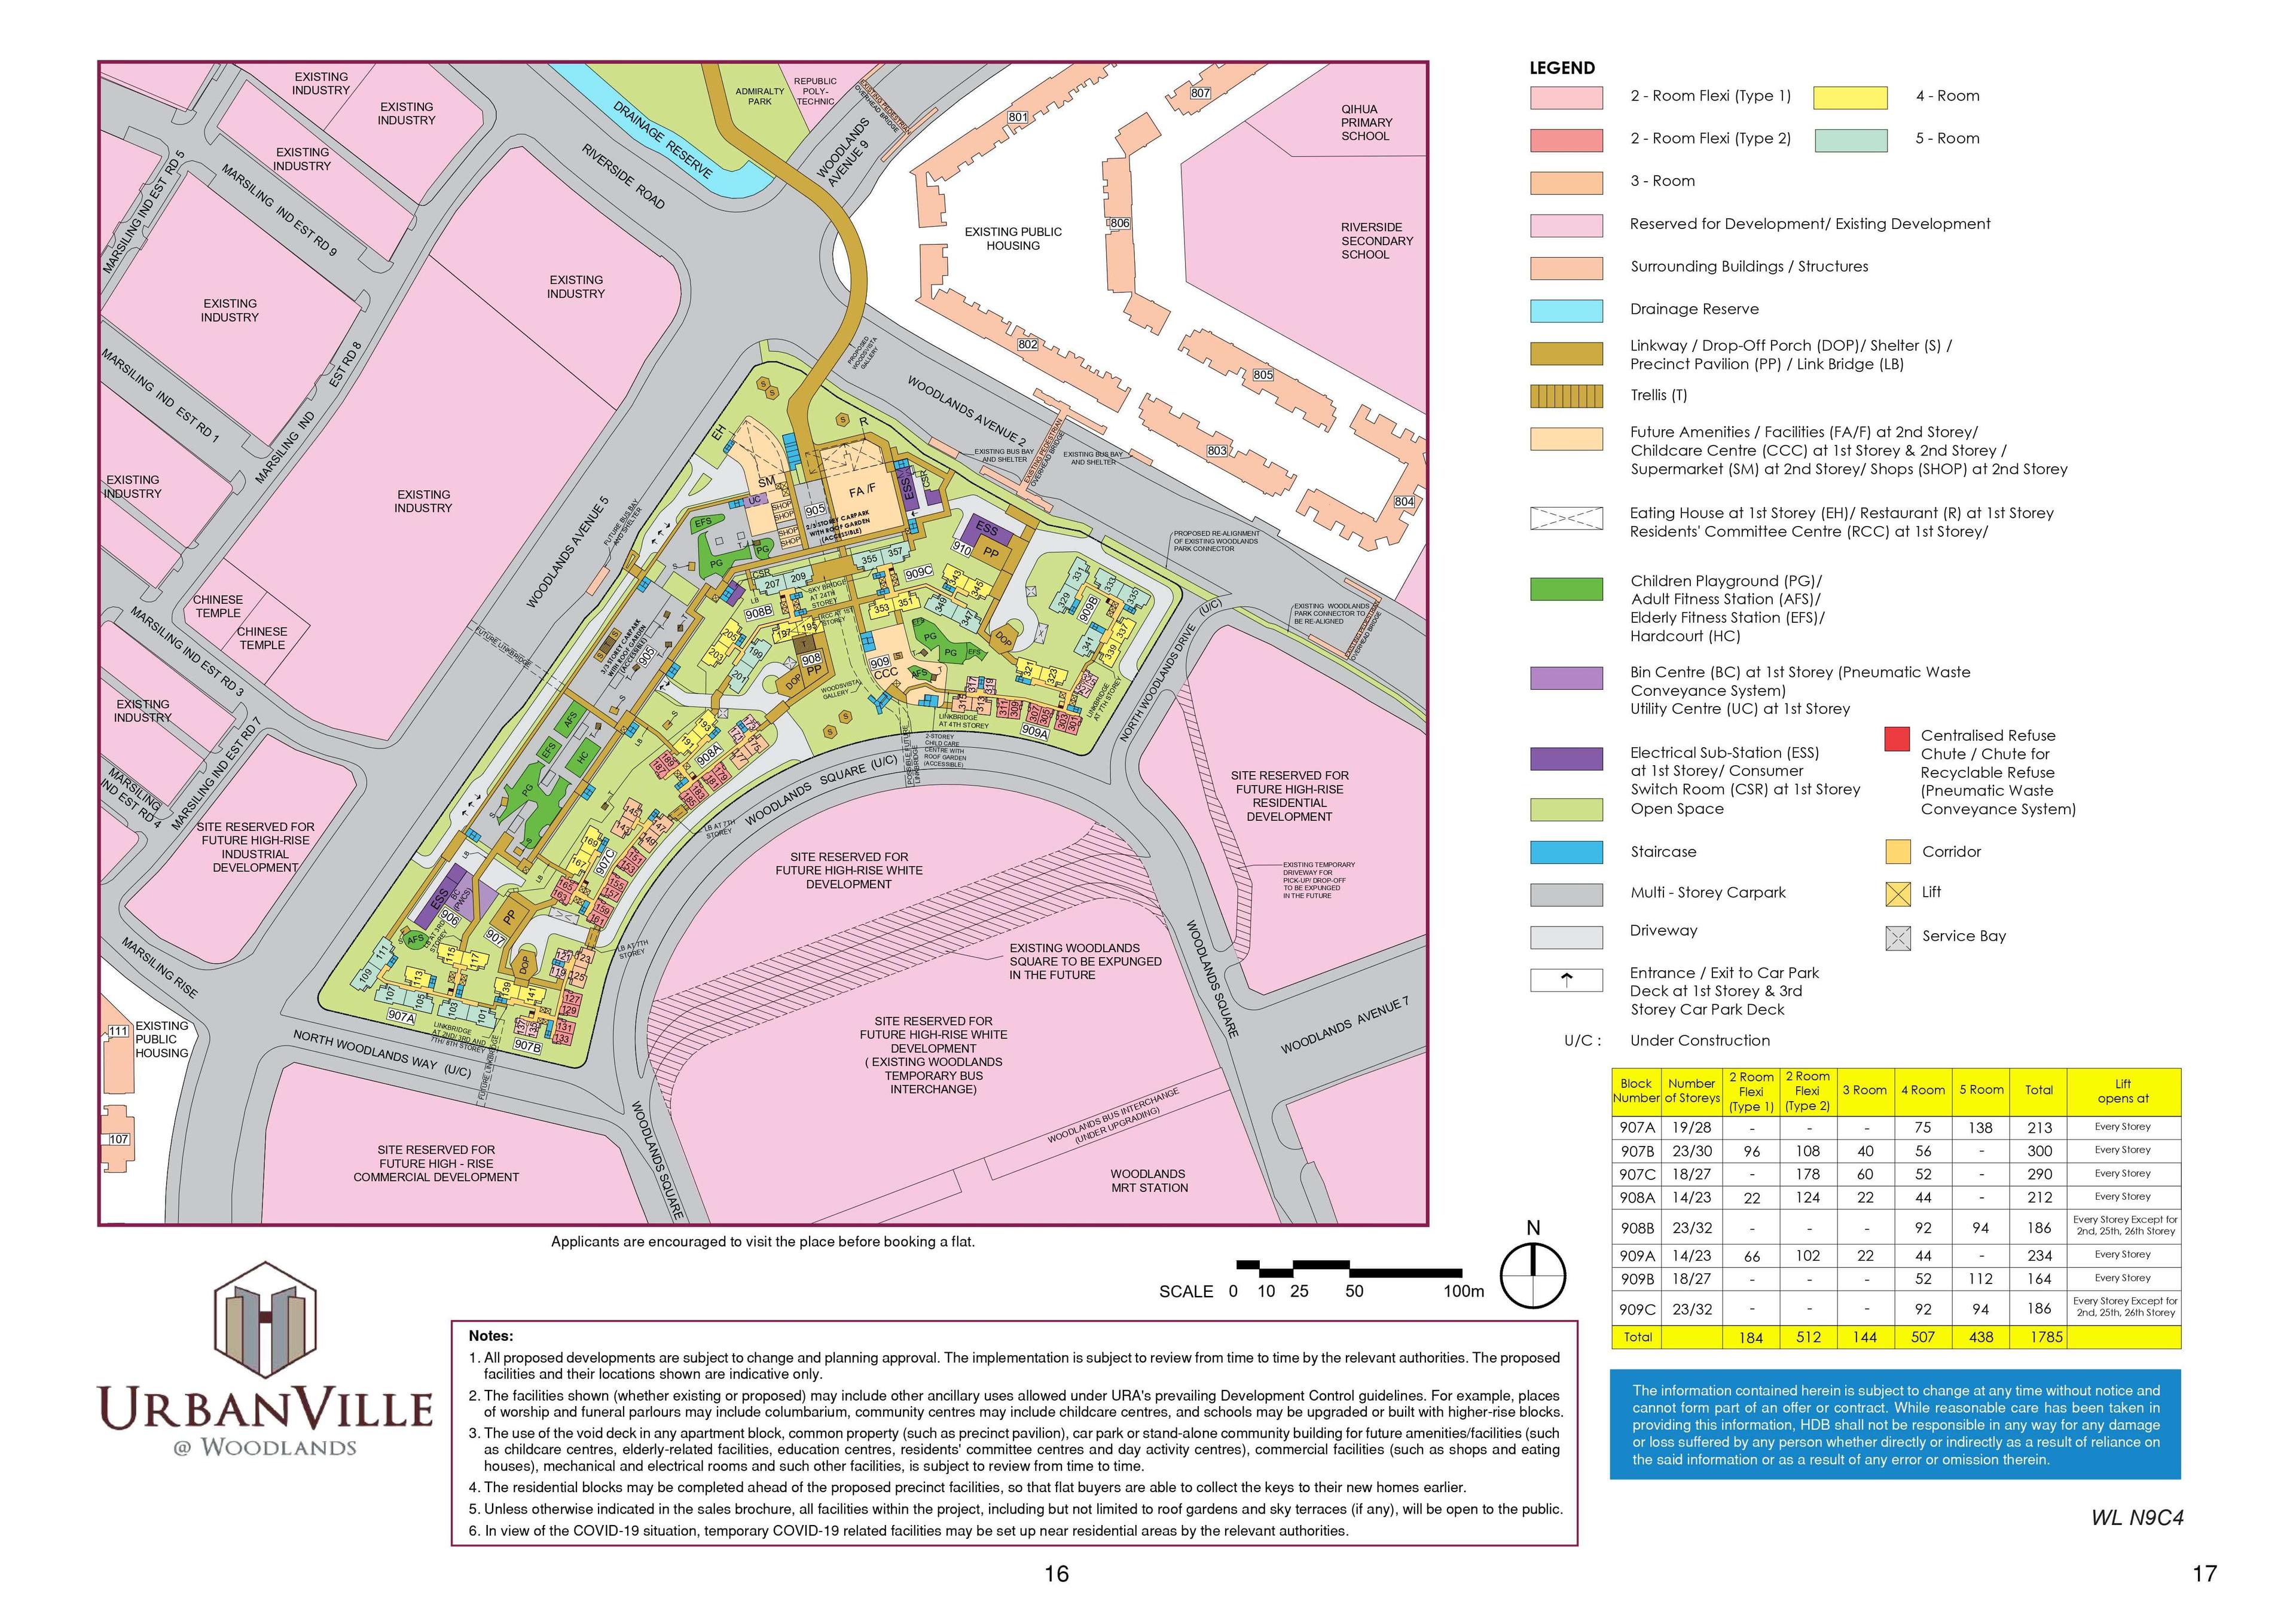 UrbanVille @ Woodlands site-plan